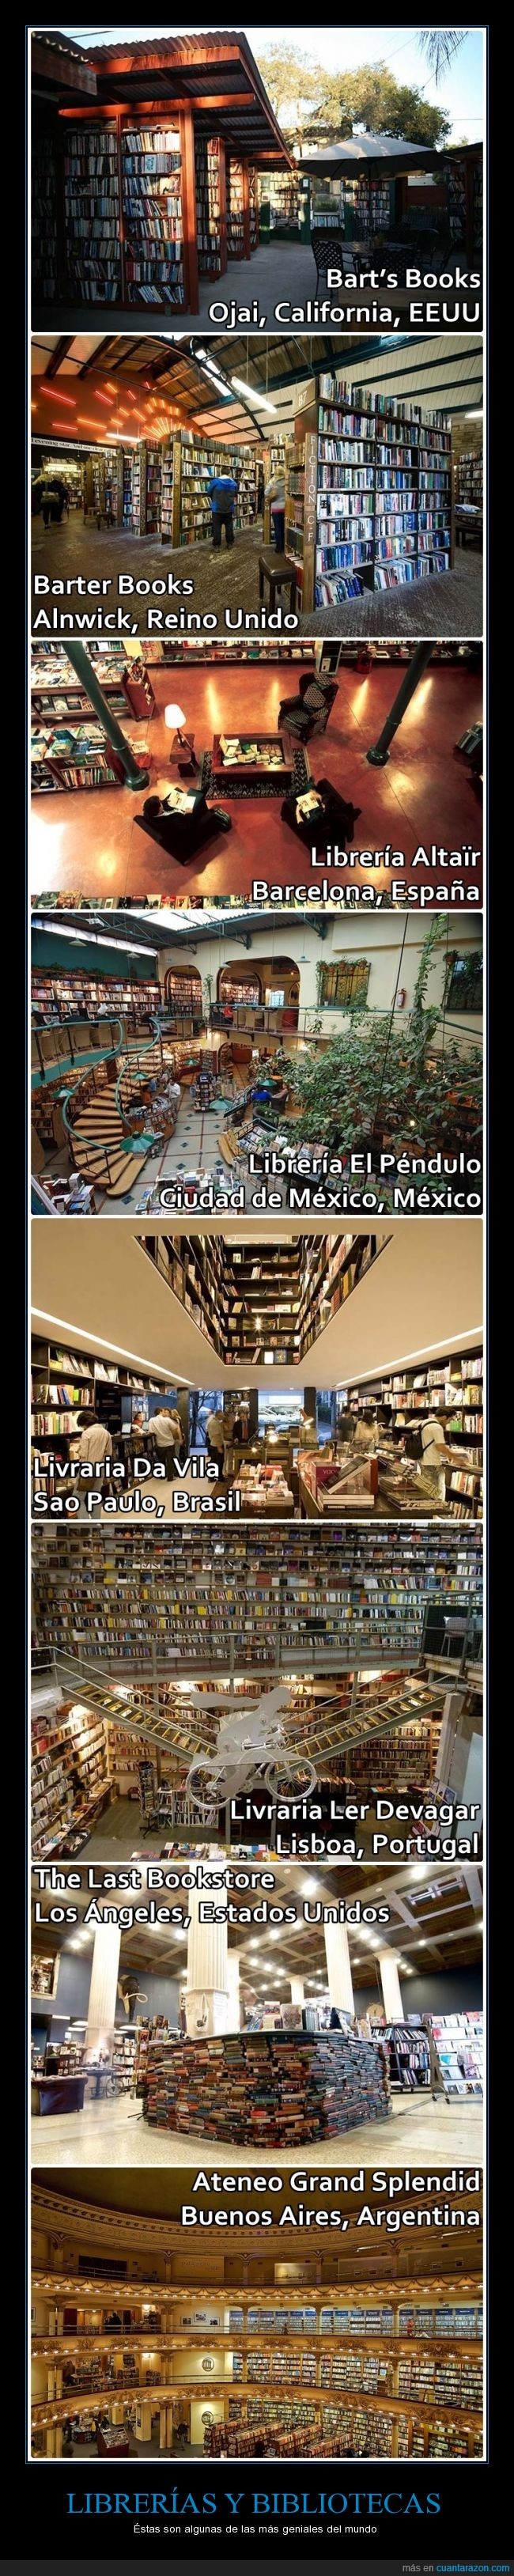 altair,Argentina,barcelona,biblioteca,Brasil,Estados Unidos,lector,leer,libreria